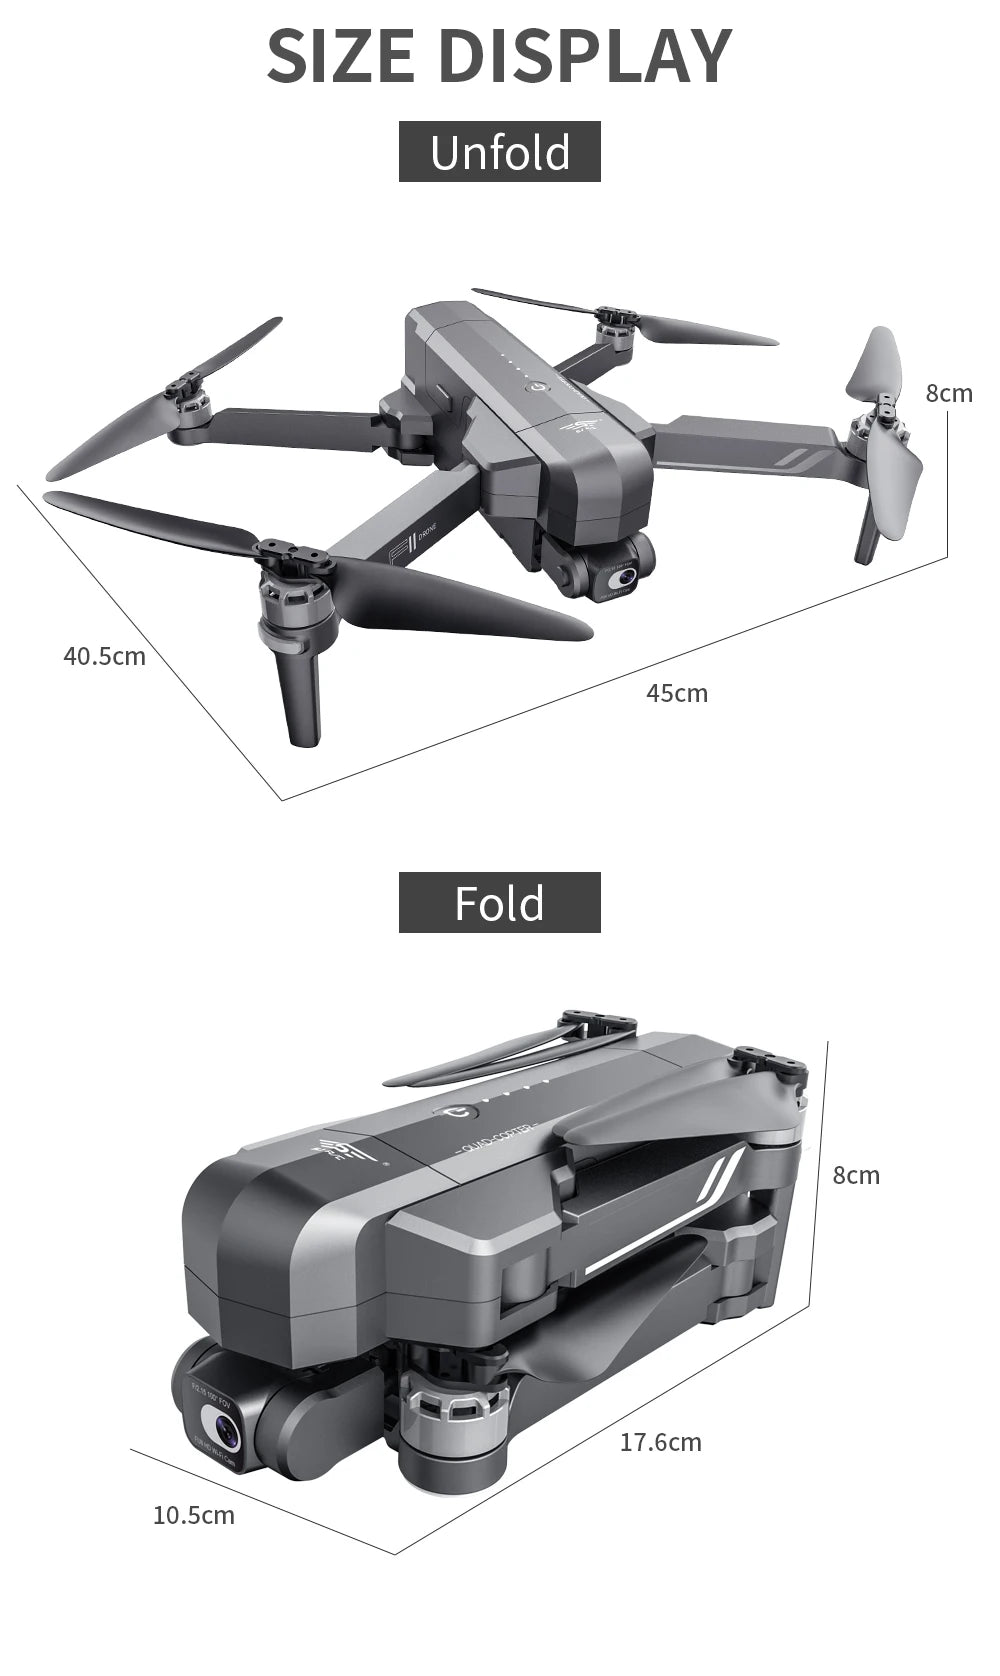 SJRC F11 / F11S  Pro Drone, SIZE DISPLAY Unfold 8cm 40.Scm 45cm